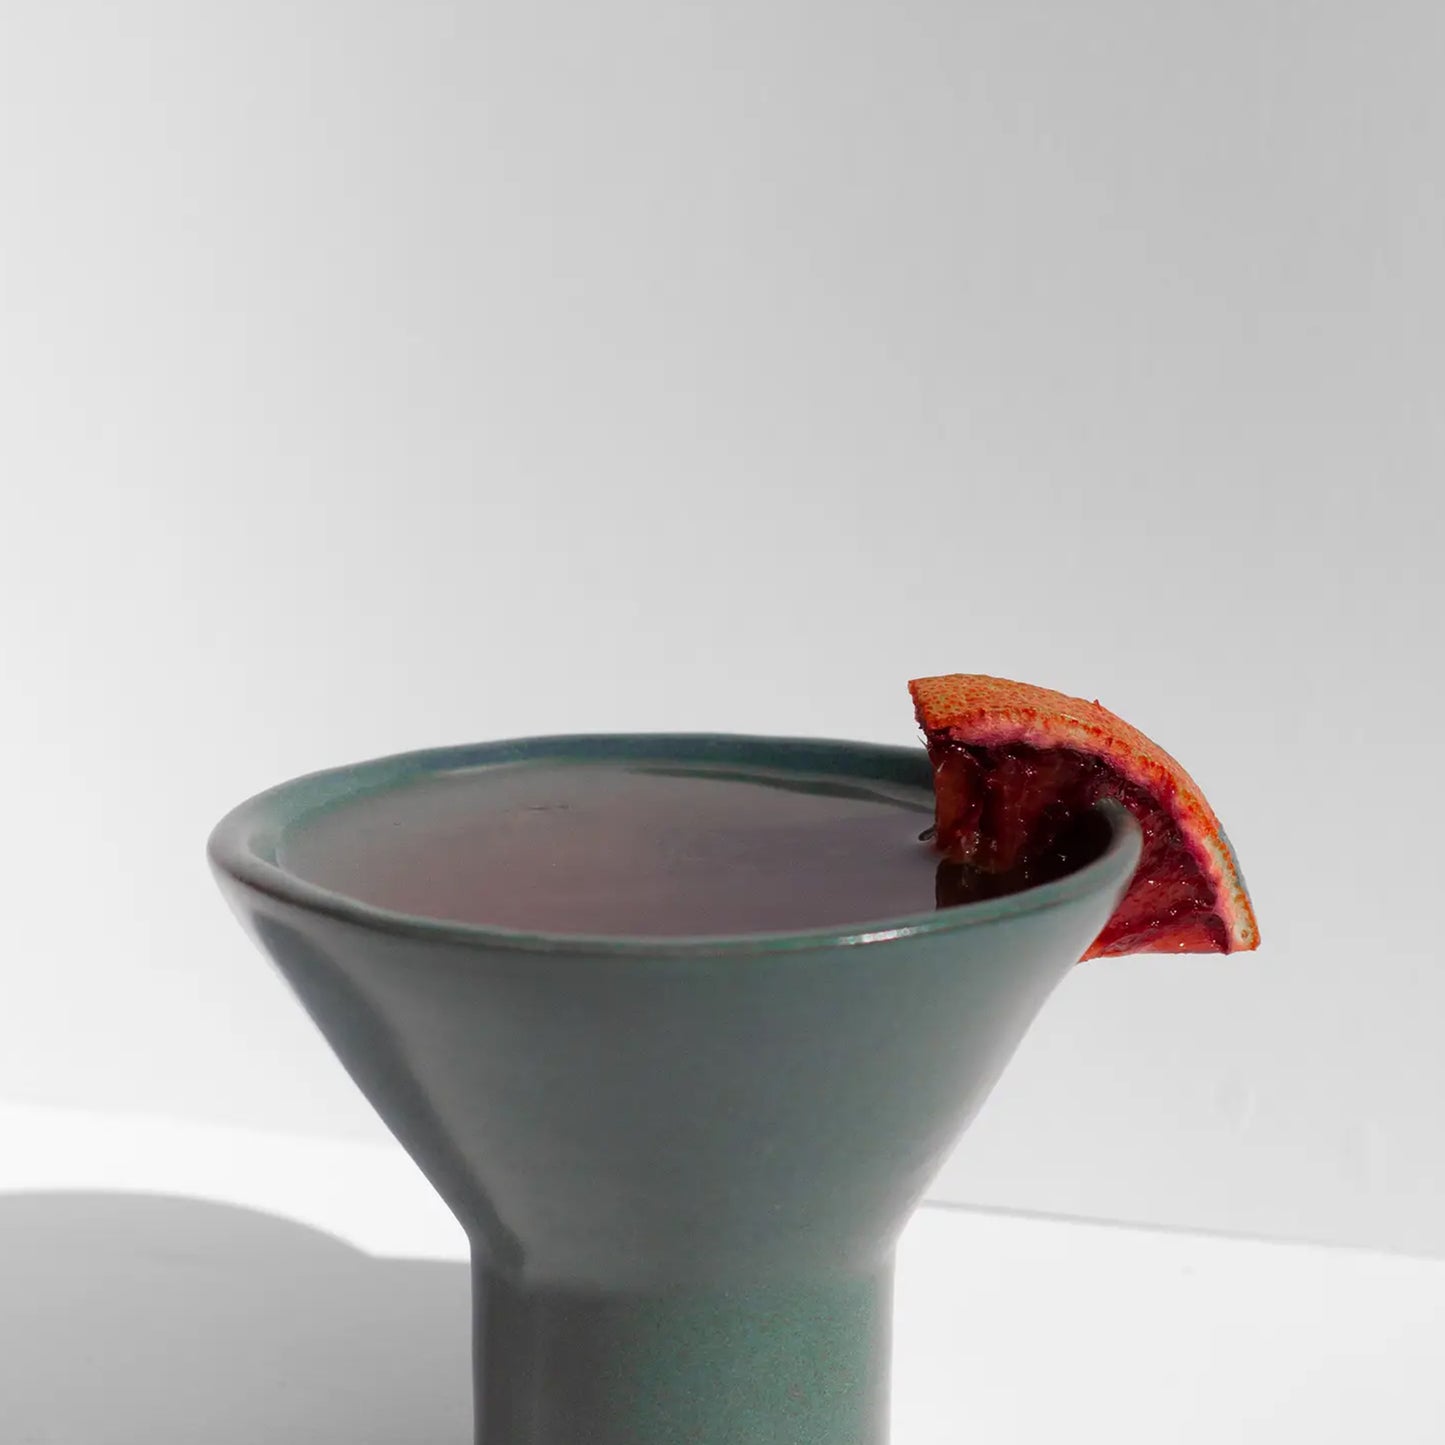 Stemless Ceramic Martini Glass in Forest